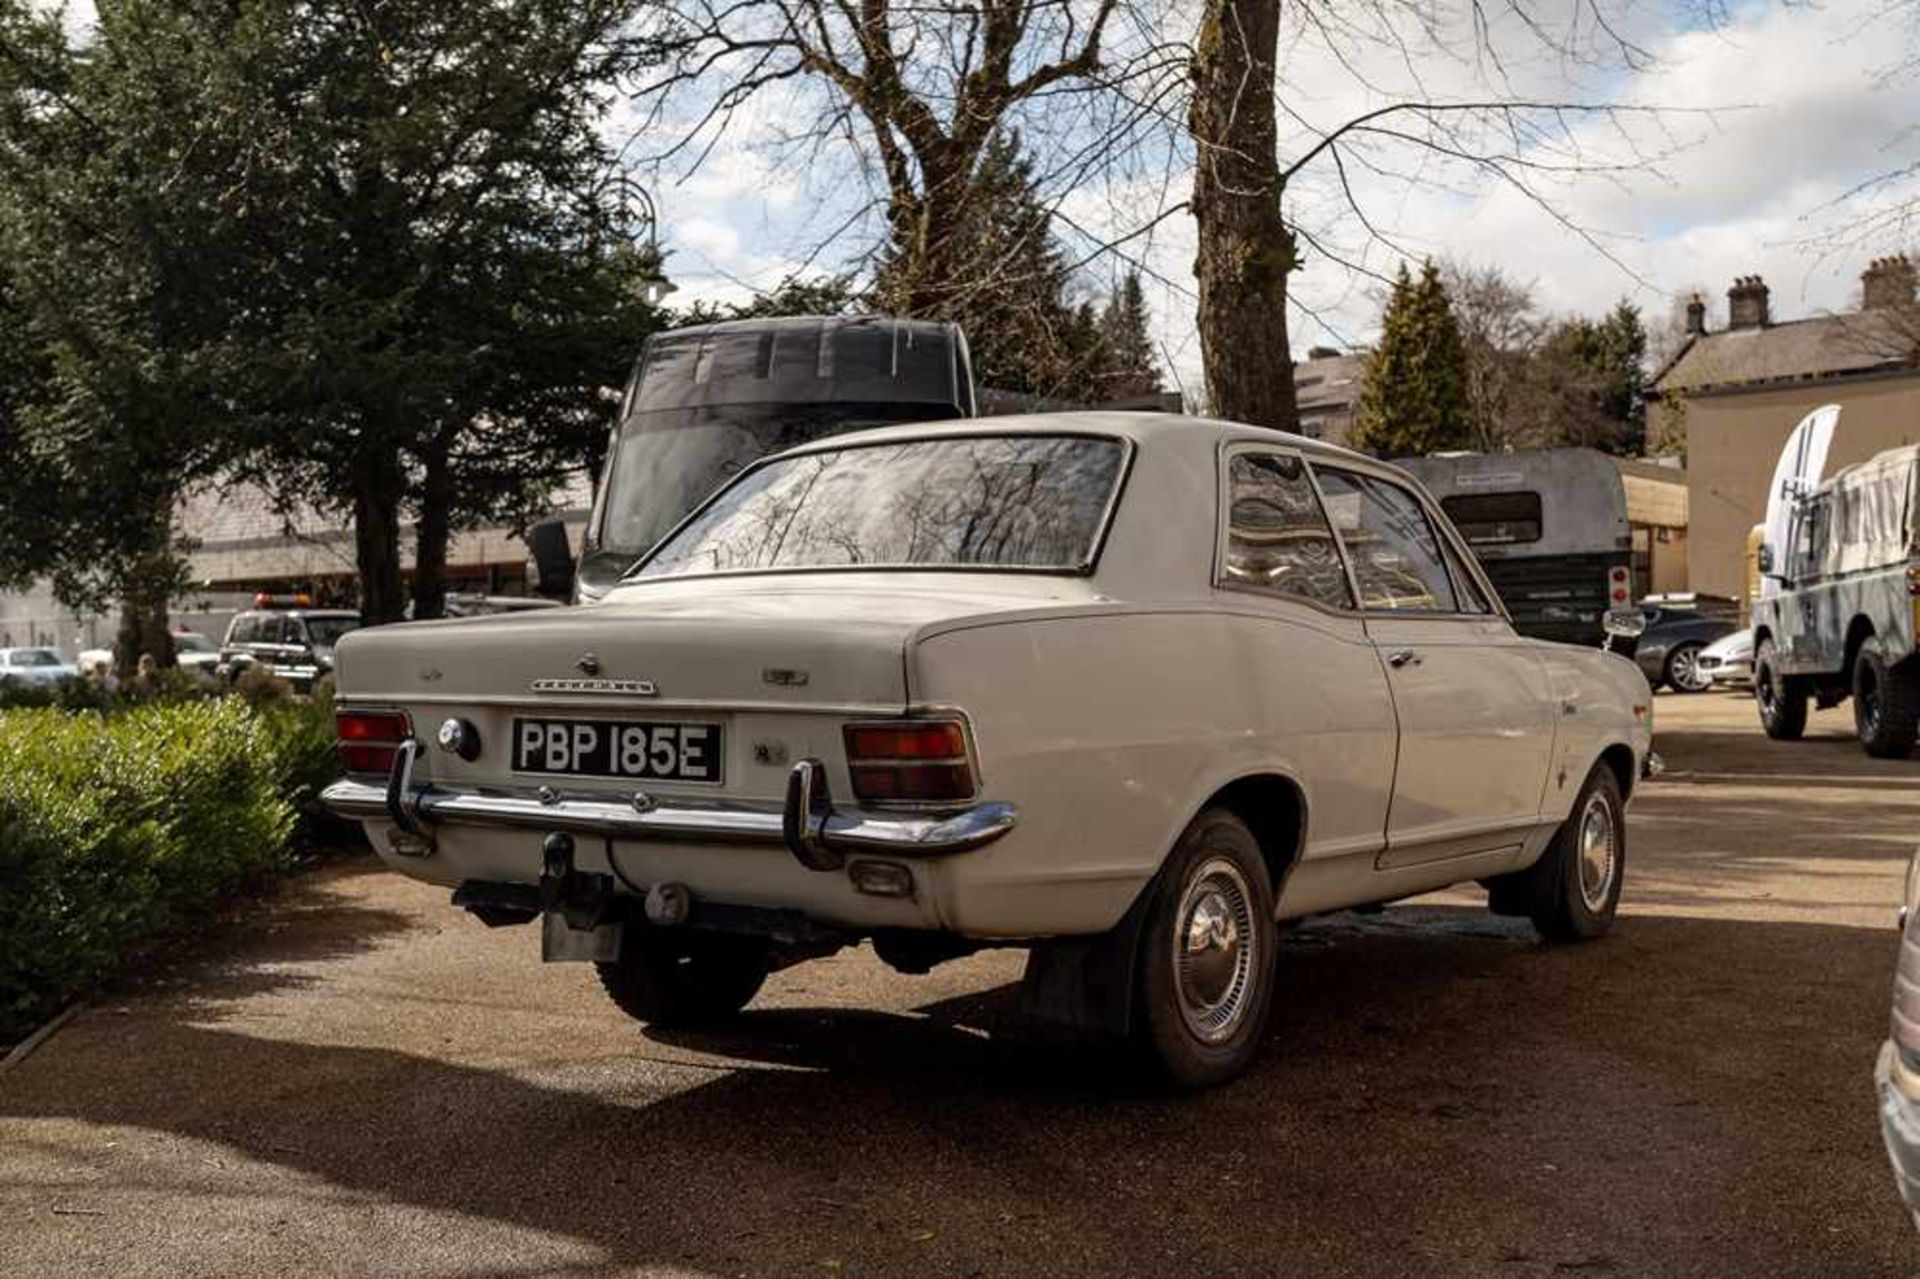 1967 Vauxhall Viva HB Period Blydenstein ‘Stage 2’ conversion - Image 8 of 33